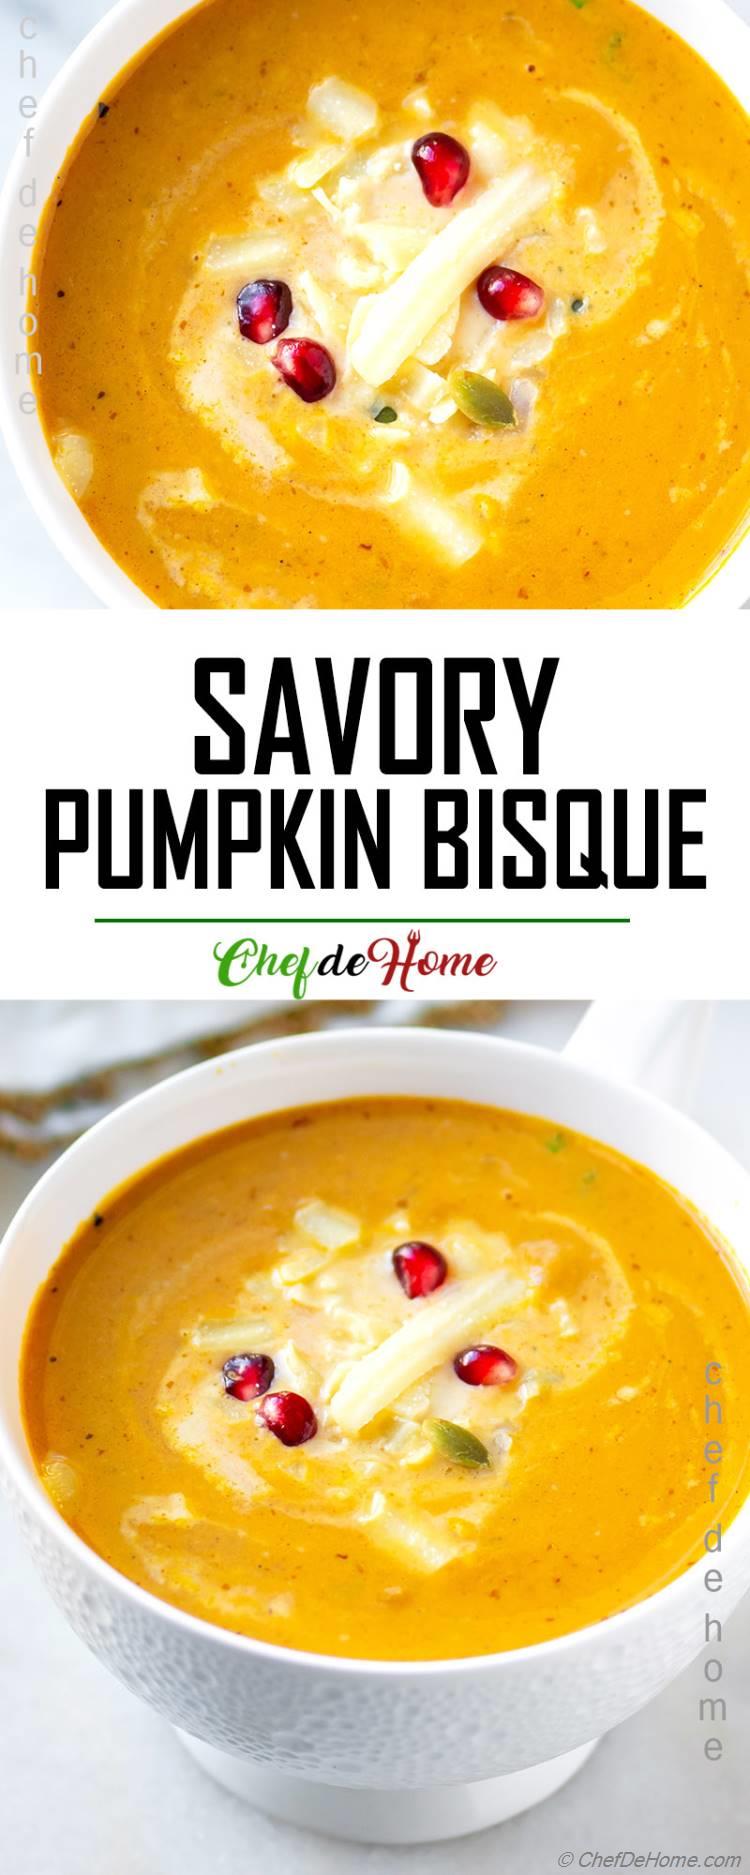 Pumpkin Bisque Soup Recipe